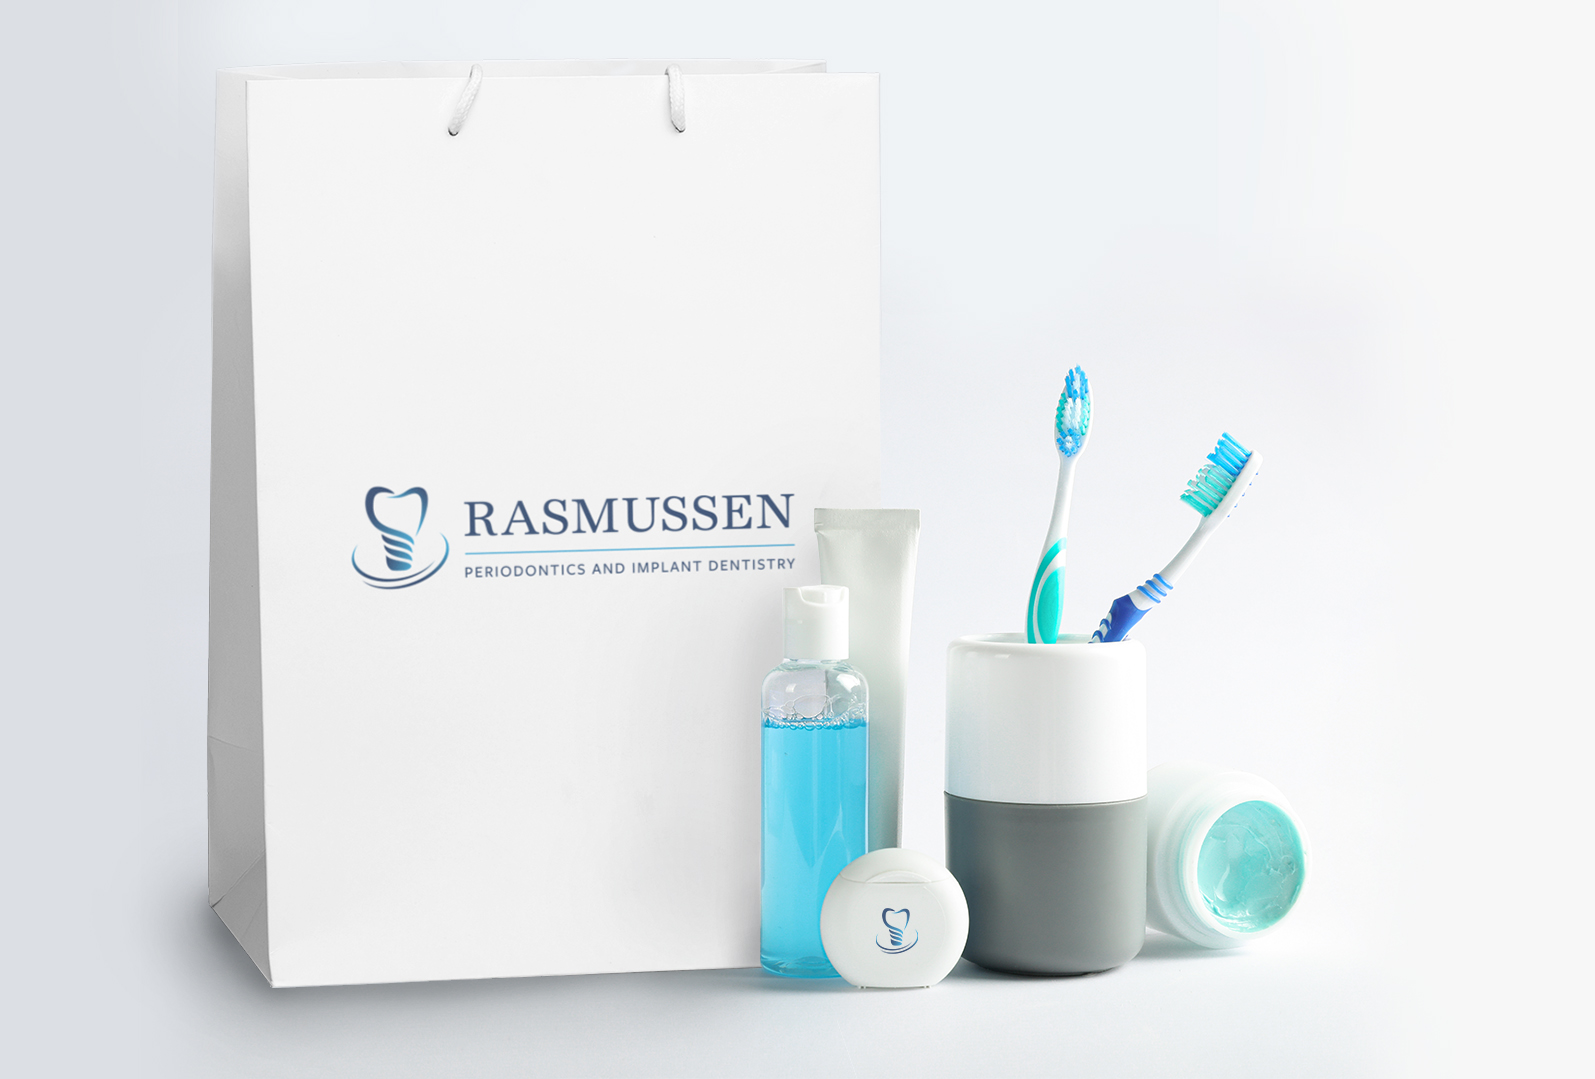 Rasmussen Periodontics Branding - NYX Awards Winner 